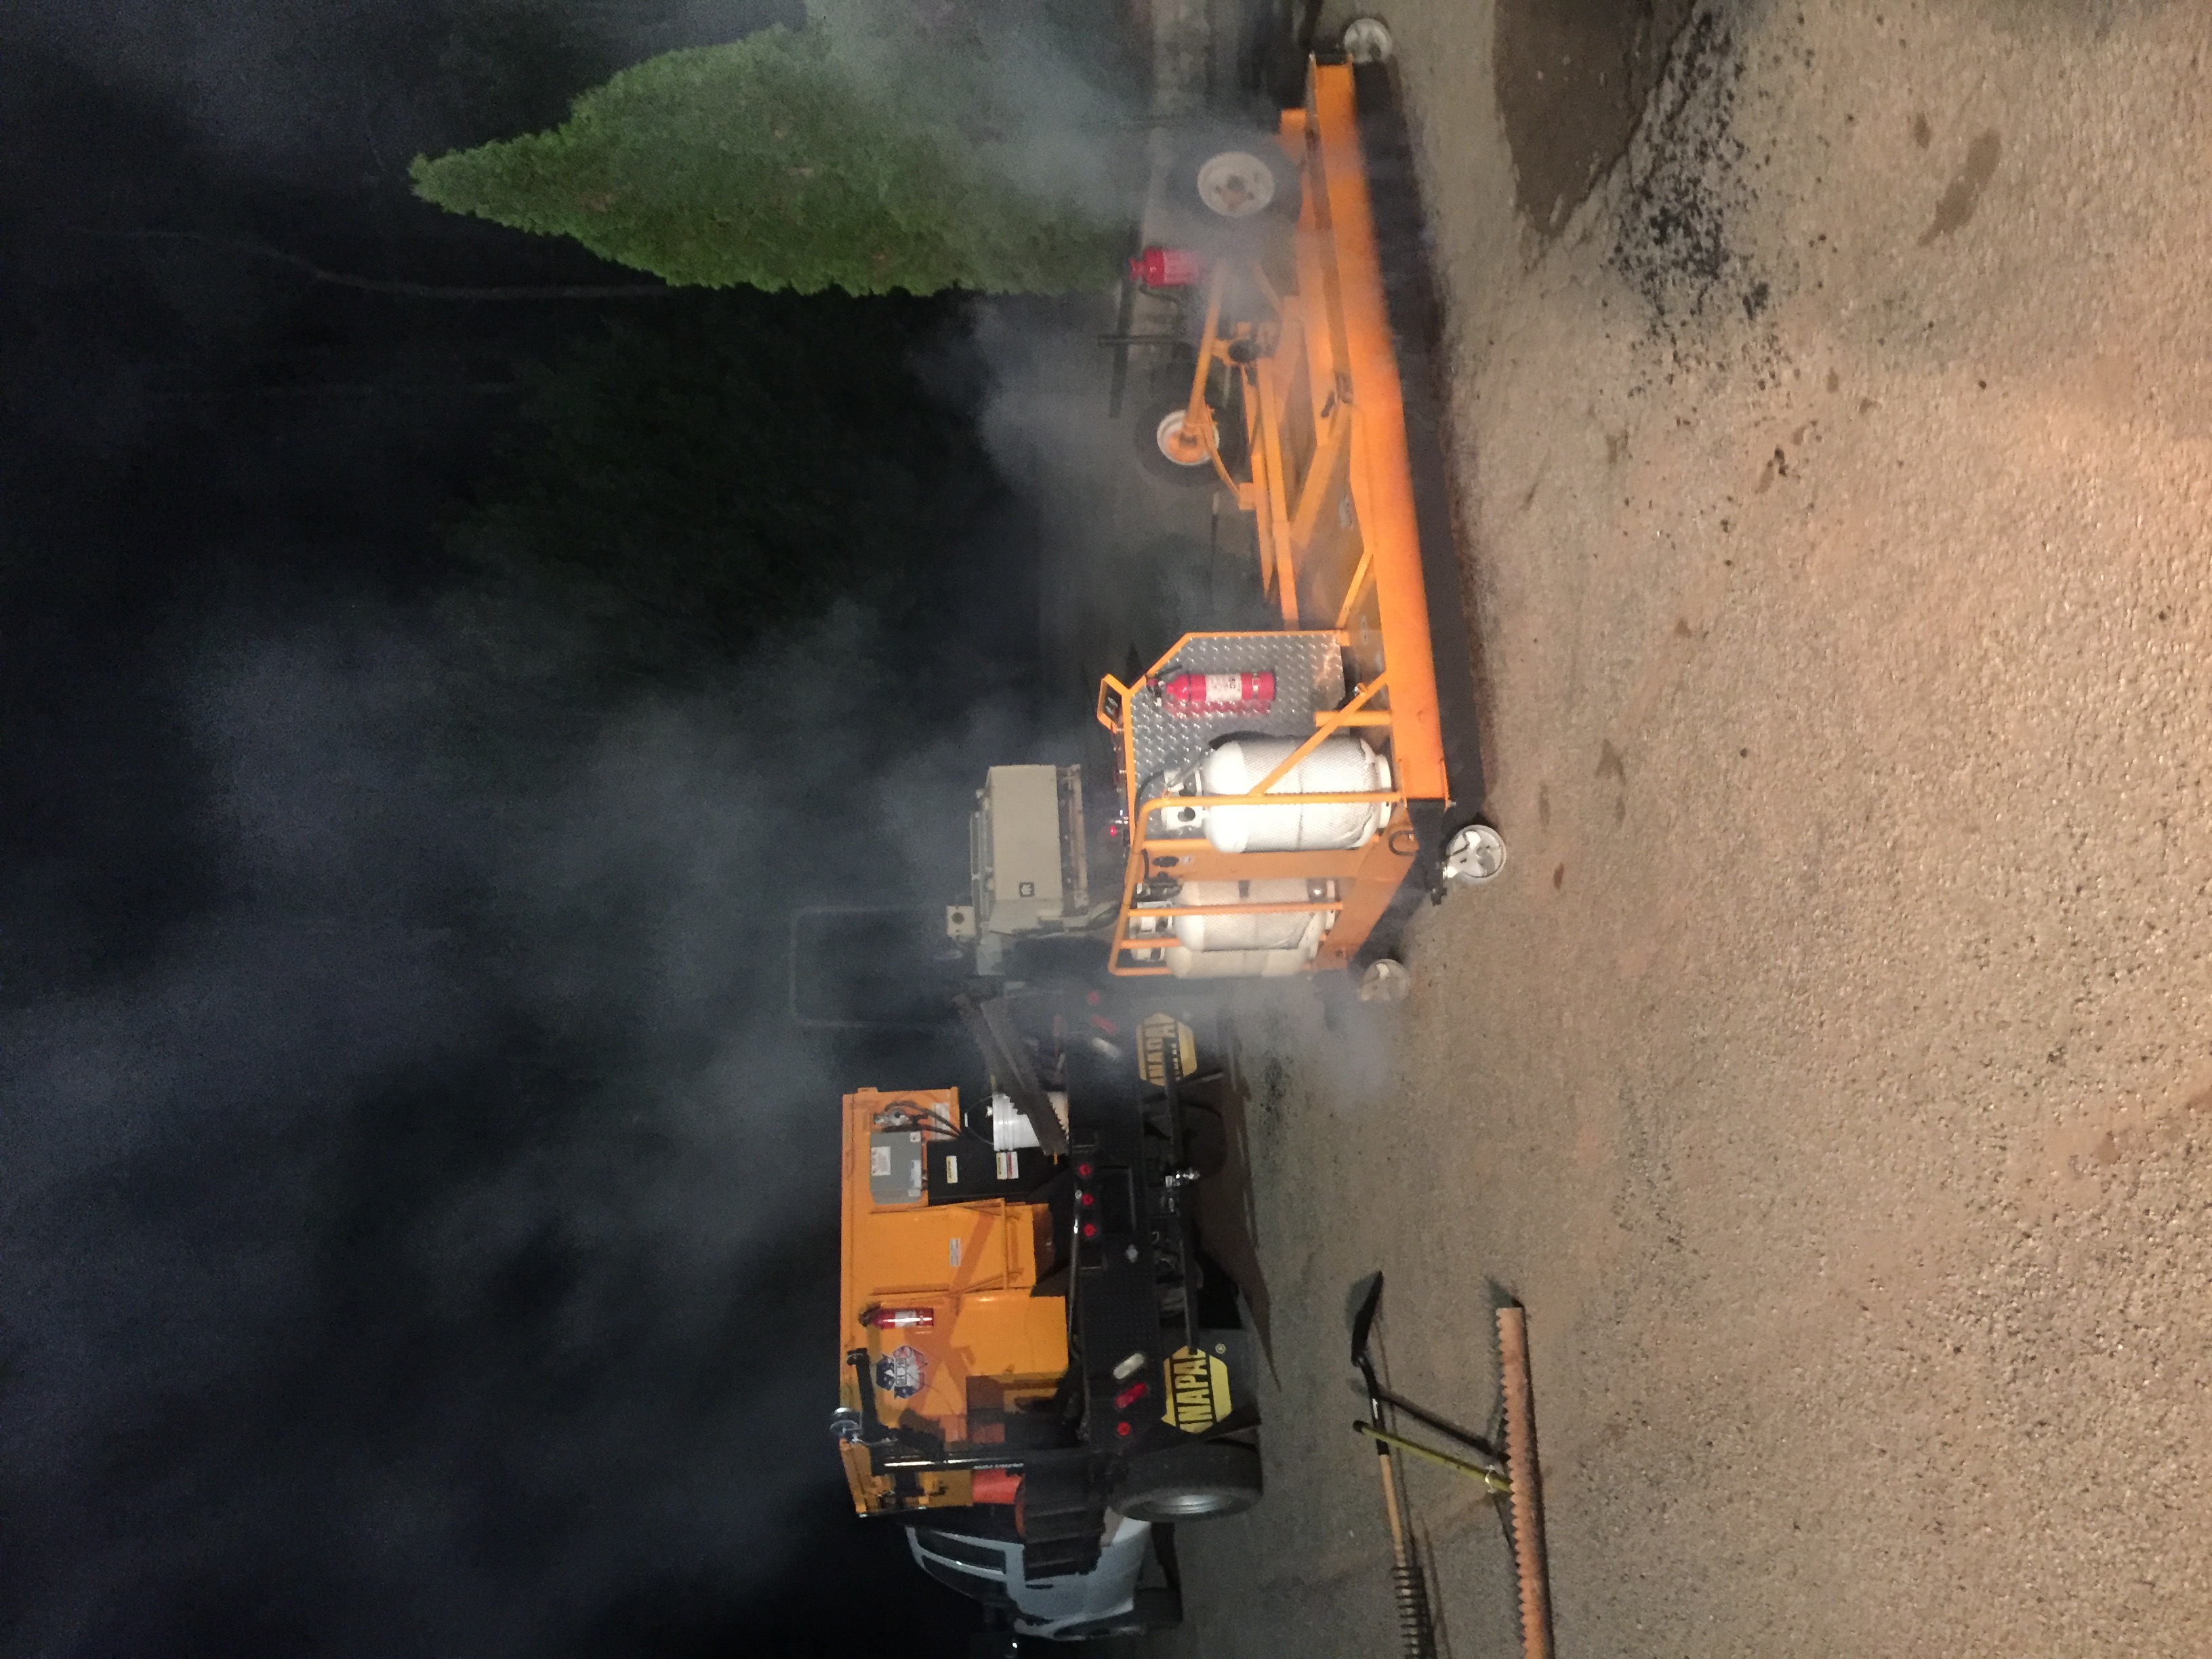 CCS crew performing infrared asphalt repair with machinery at night.